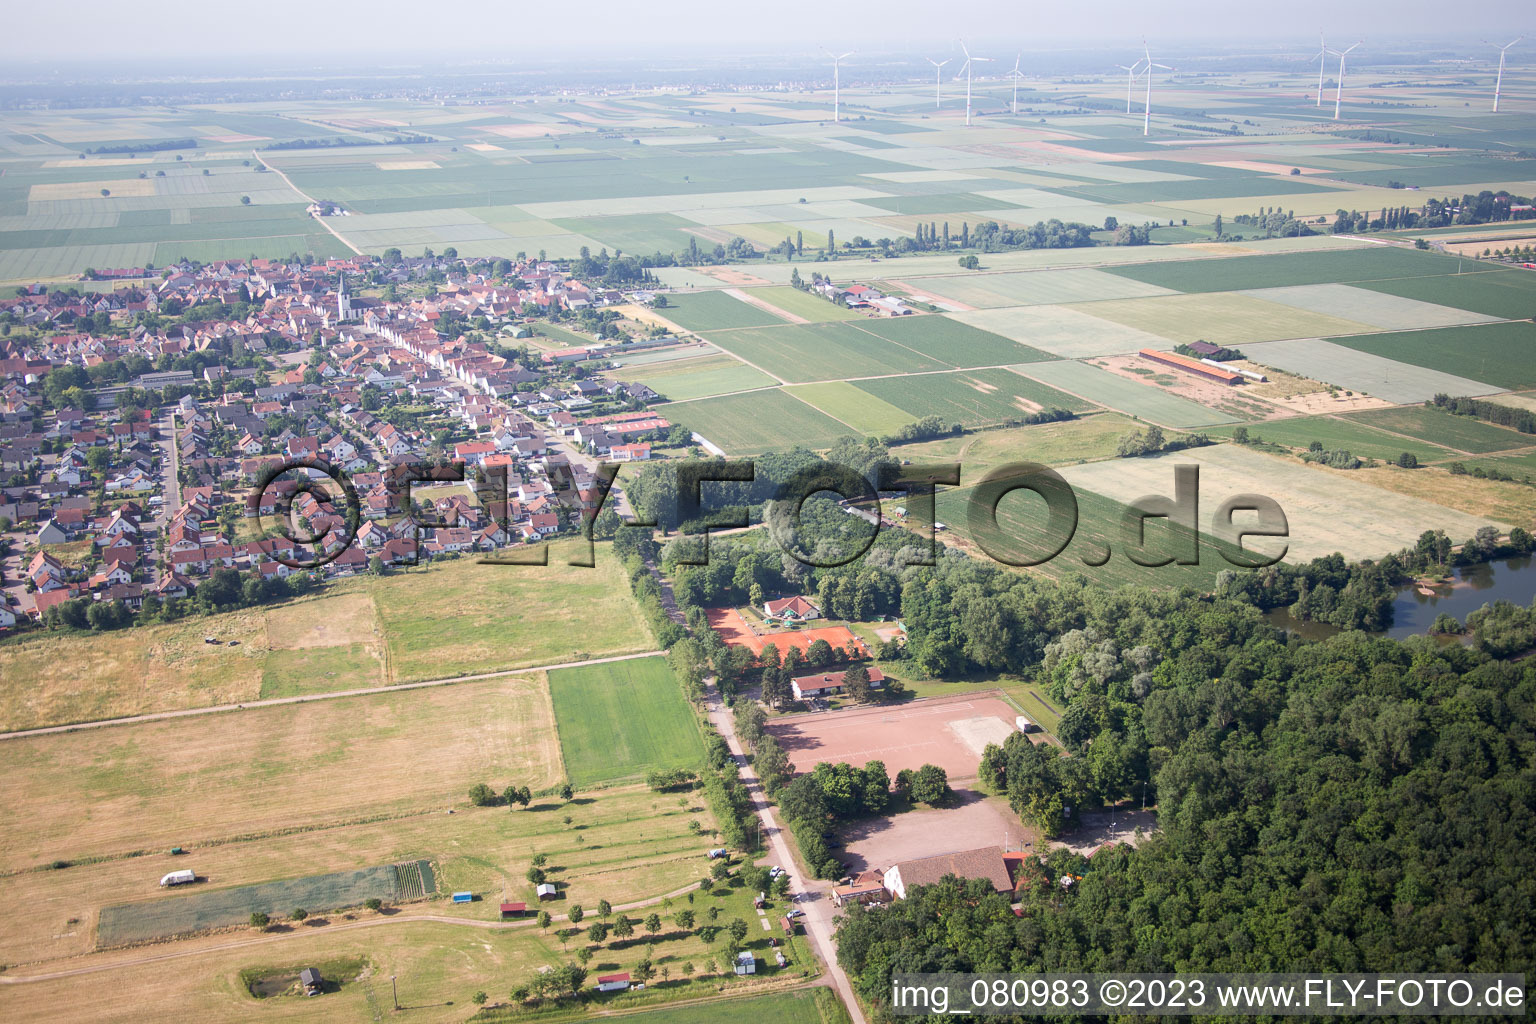 Drone image of Ottersheim bei Landau in the state Rhineland-Palatinate, Germany